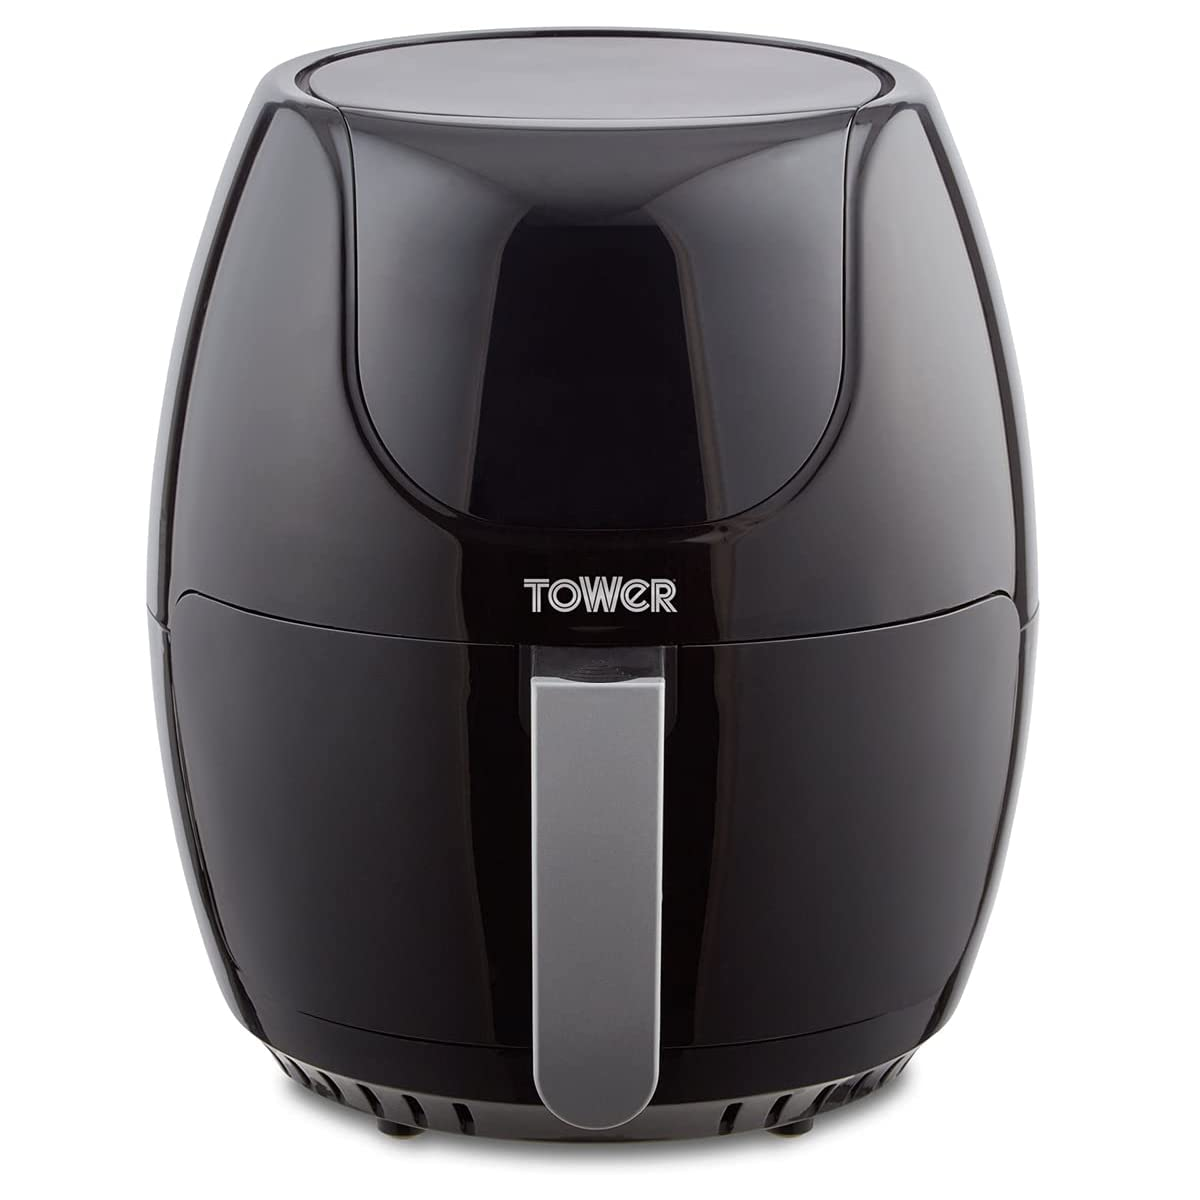 Tower T17067 Vortx Black Digital Portable Air Fryer, 4L 1400W